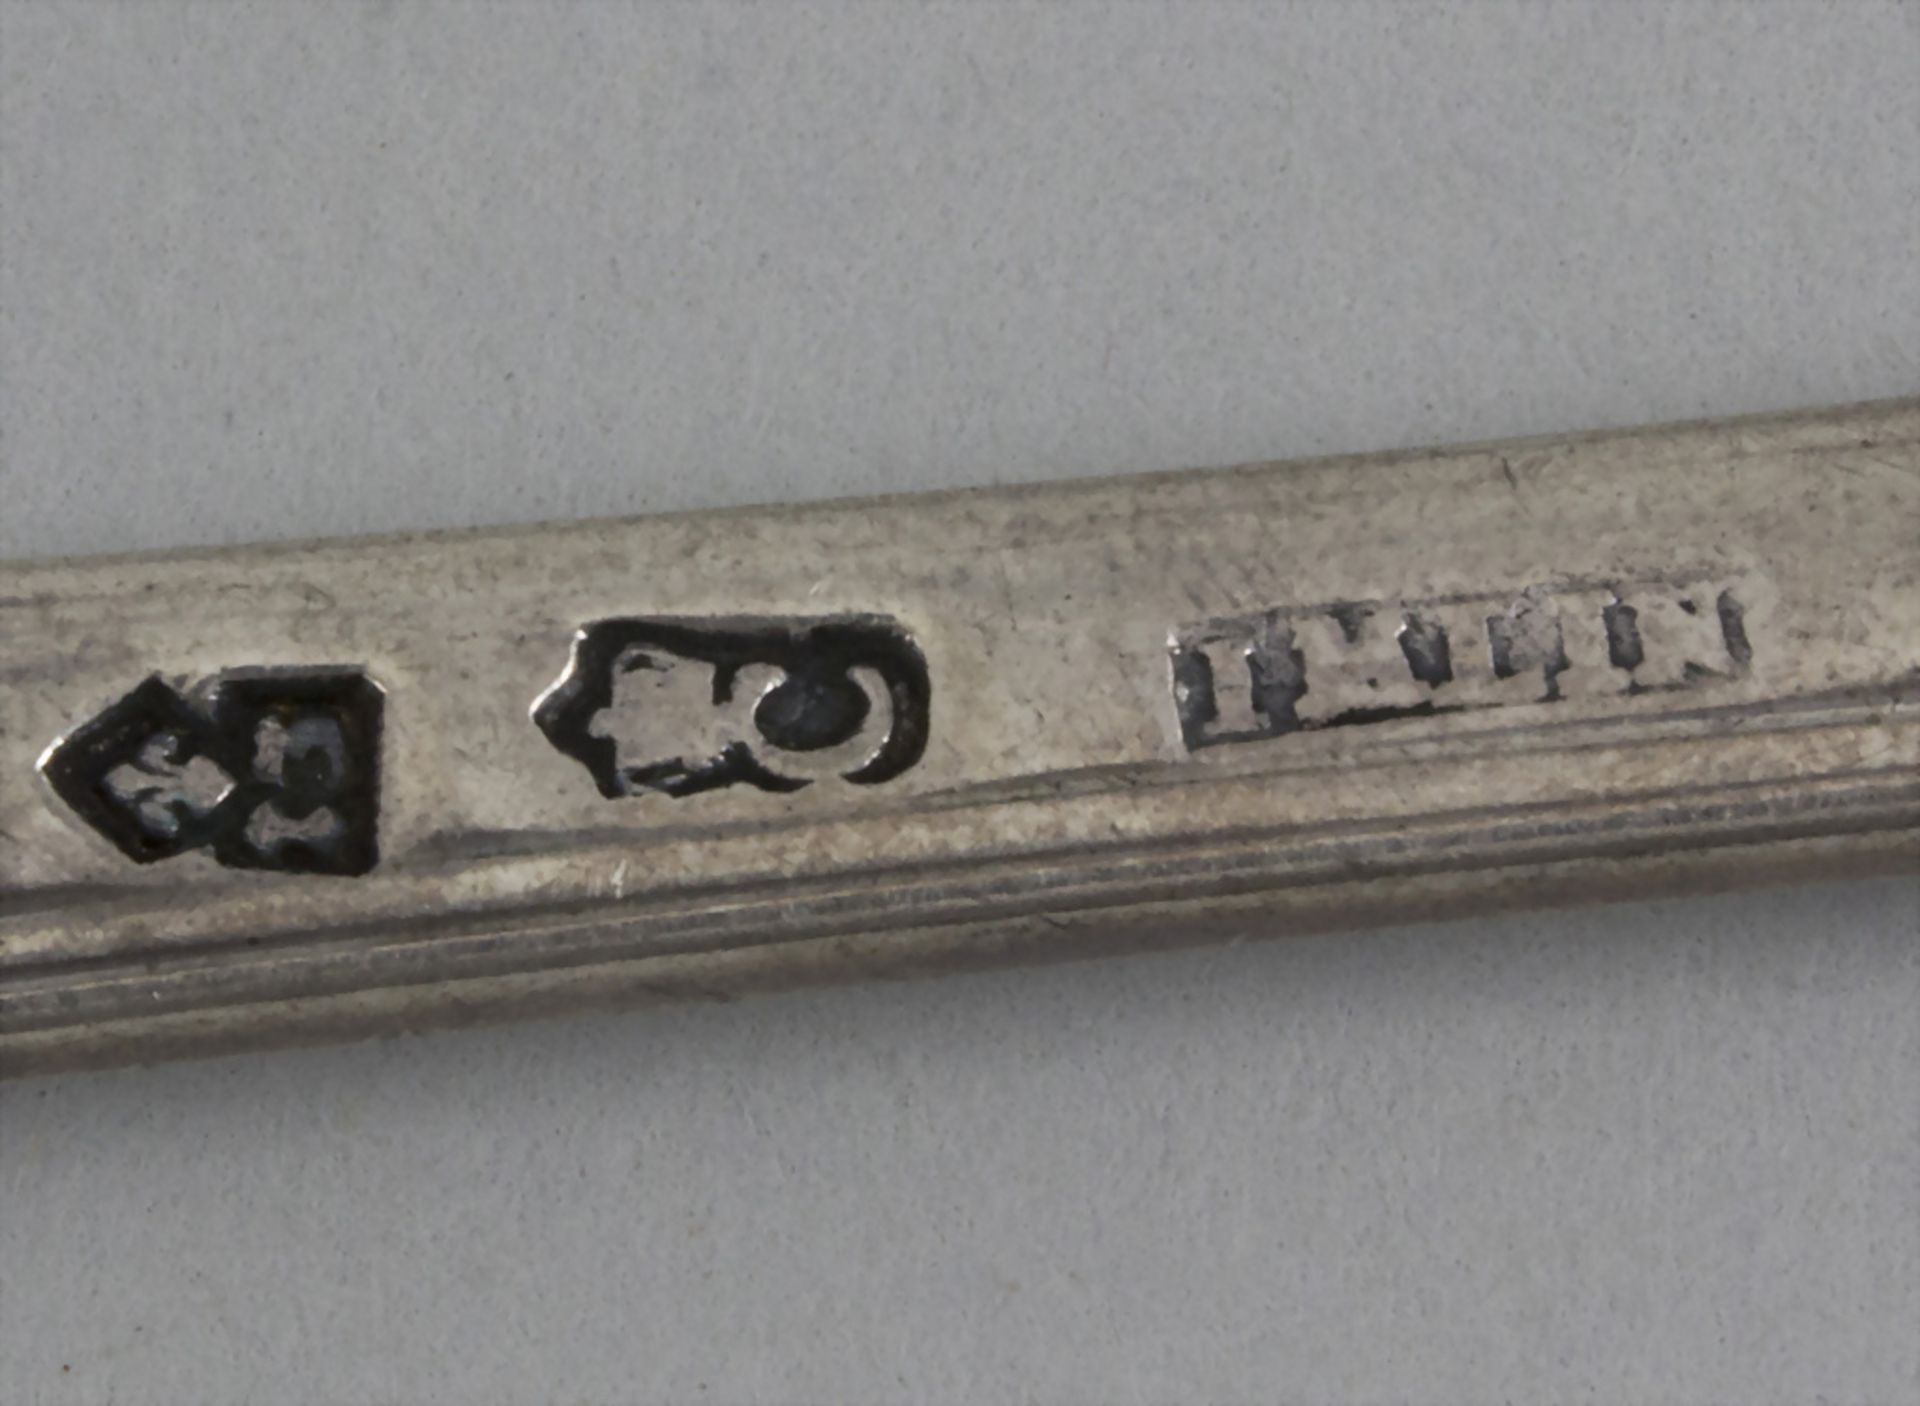 25 tlg. Silberbesteck / 25 pieces of silver cutlery, Imlin, Straßburg / Strasbourg, 1778 - Image 6 of 6